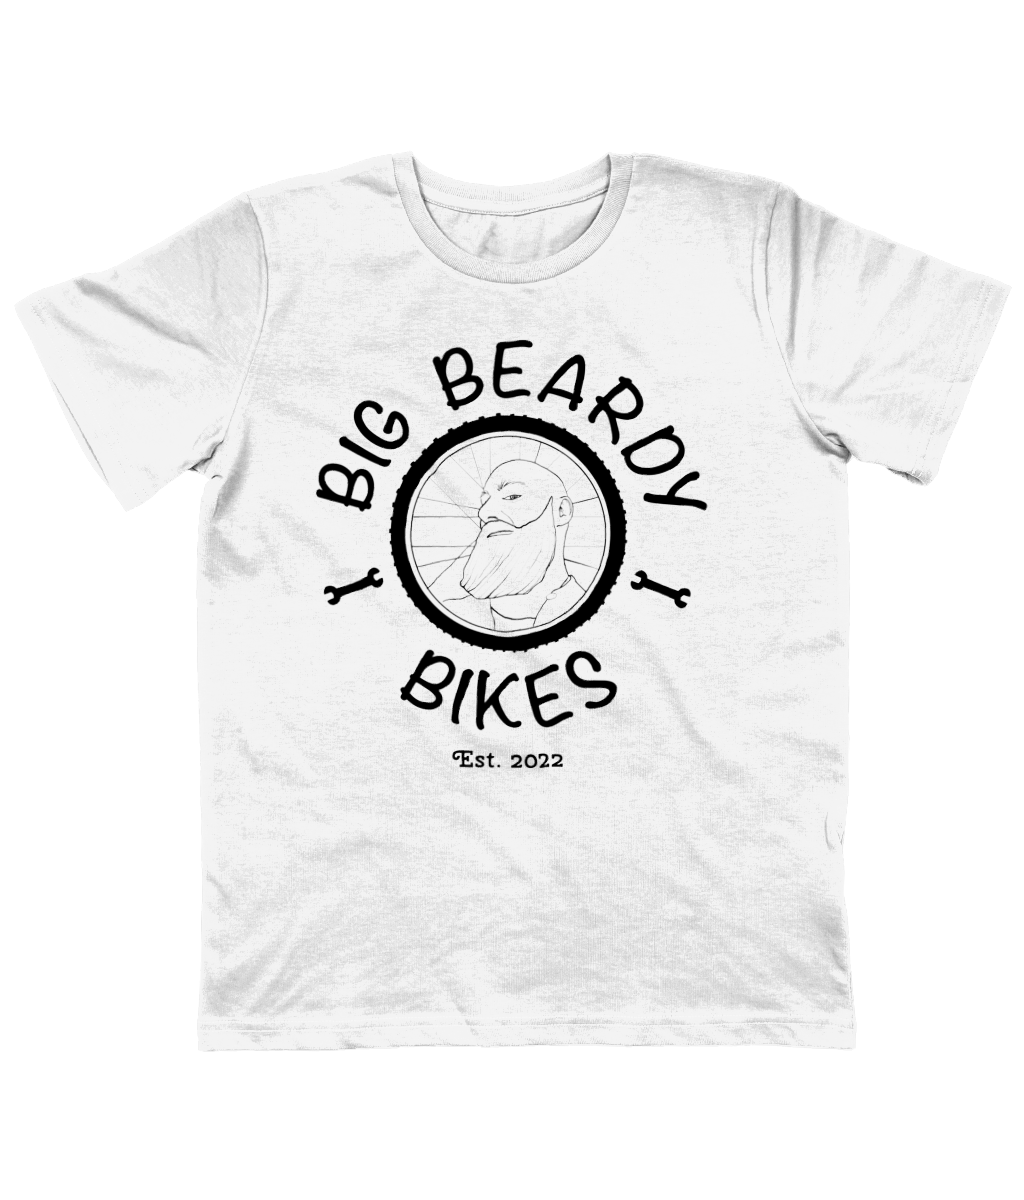 Big beardy bikes bicycle mechanic Junior Classic Jersey T-Shirt white - Black Logo